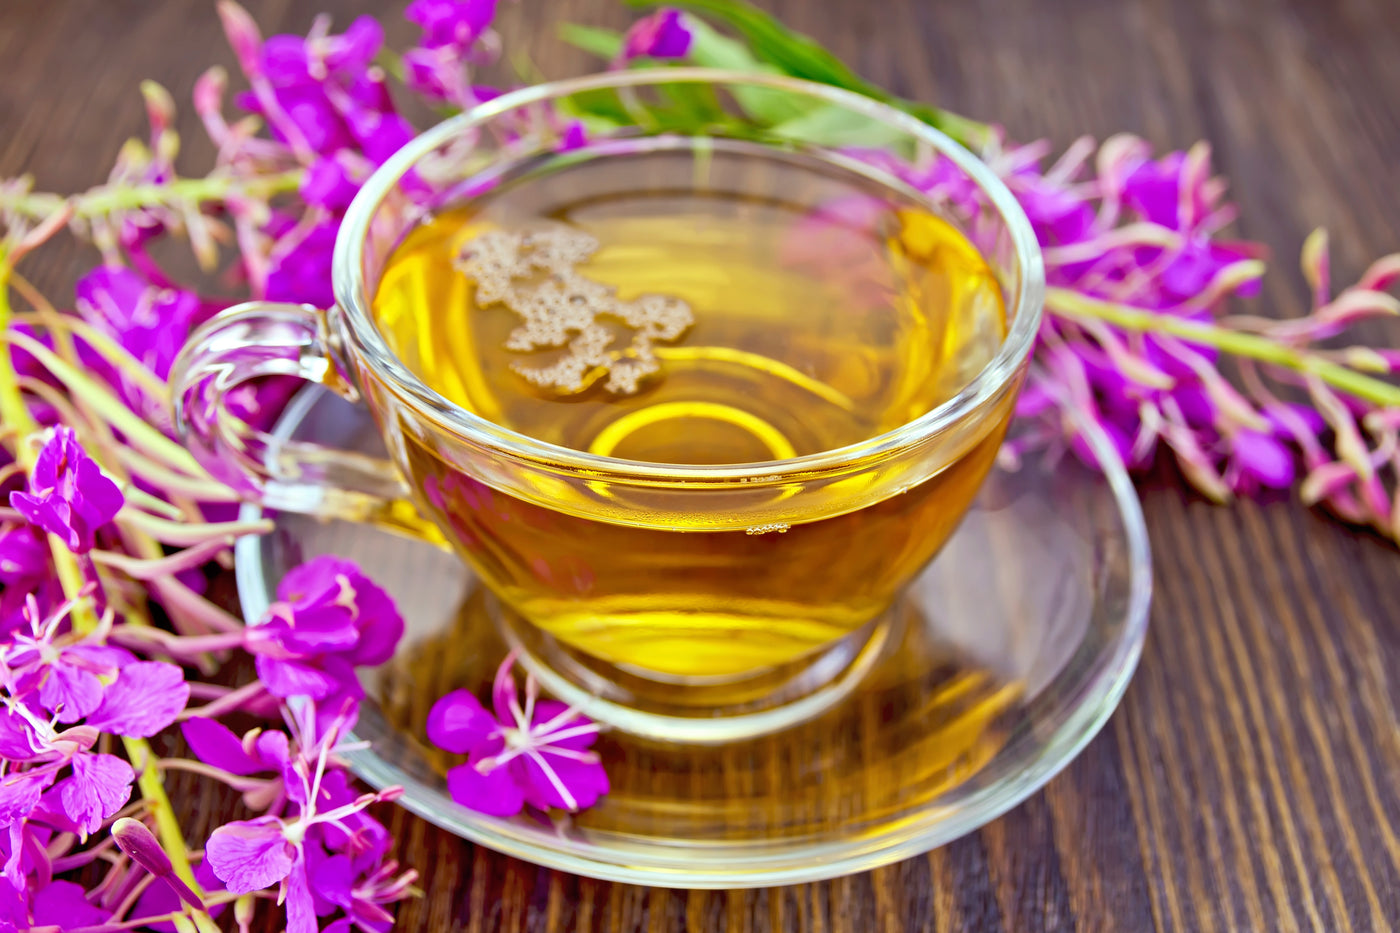 Tisanes and Herbal Tea